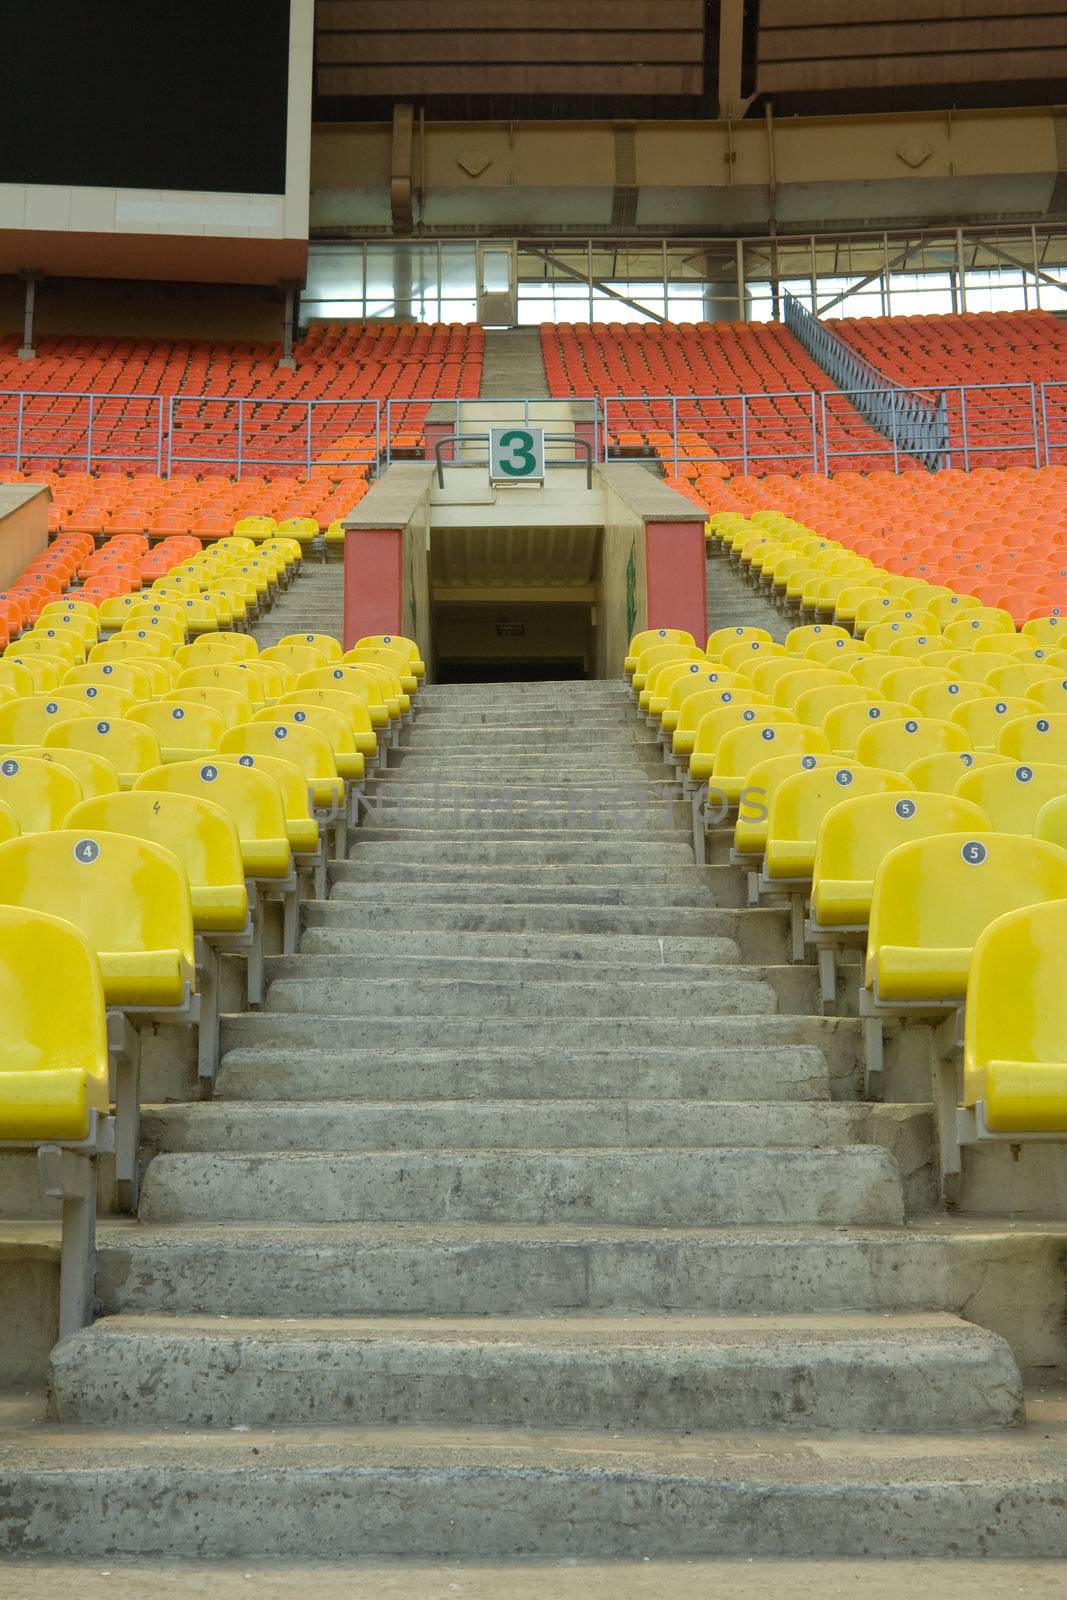 stadium by tsvgloom